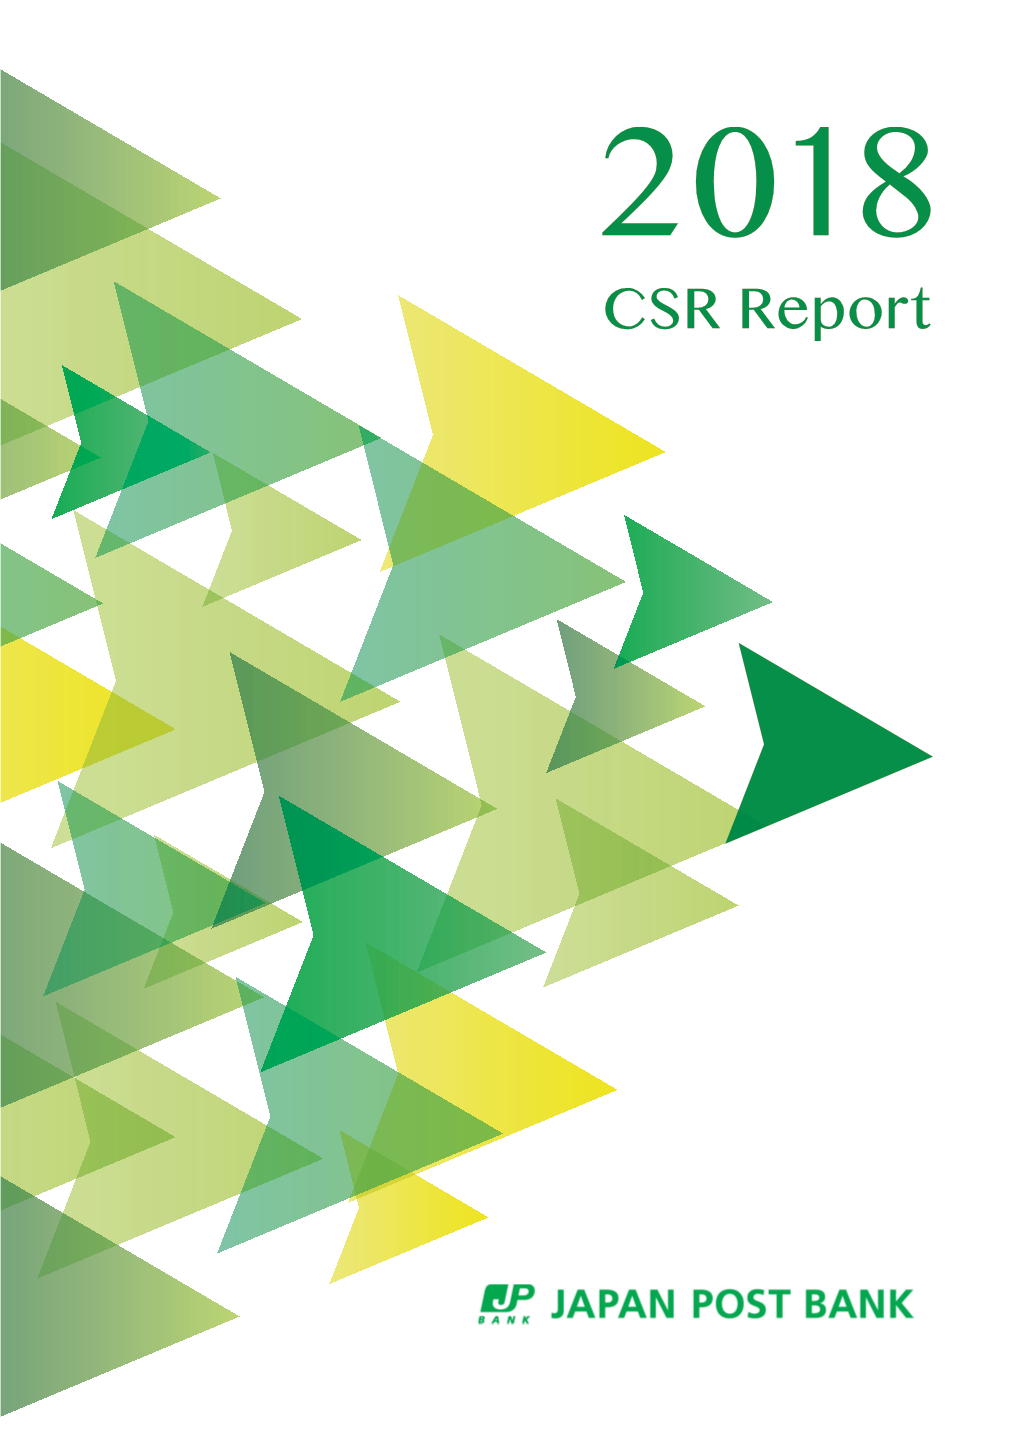 JAPAN POST BANK CSR Report 2018